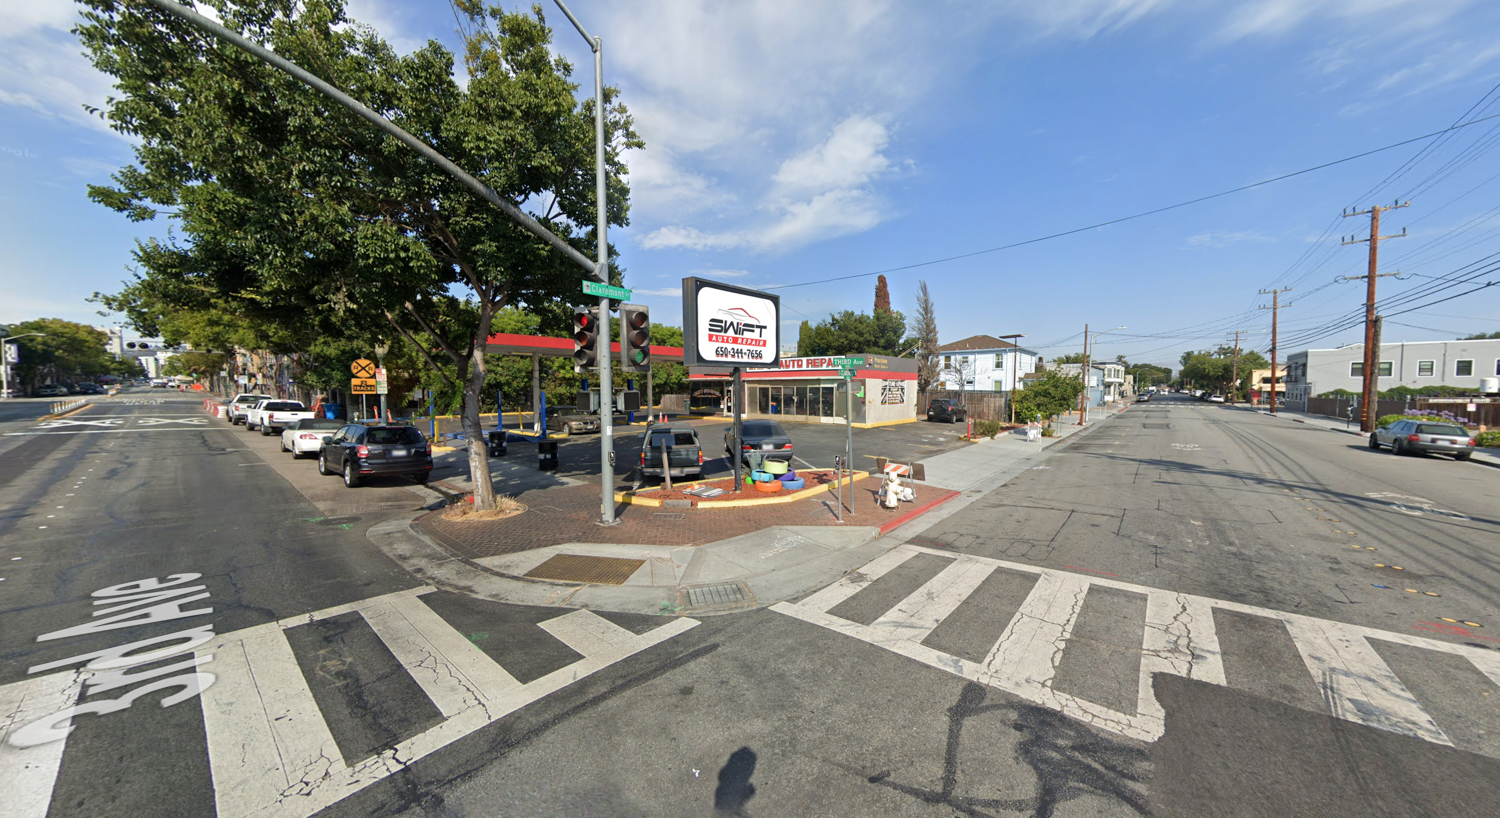 435 East 3rd Avenue, image via Google Street View